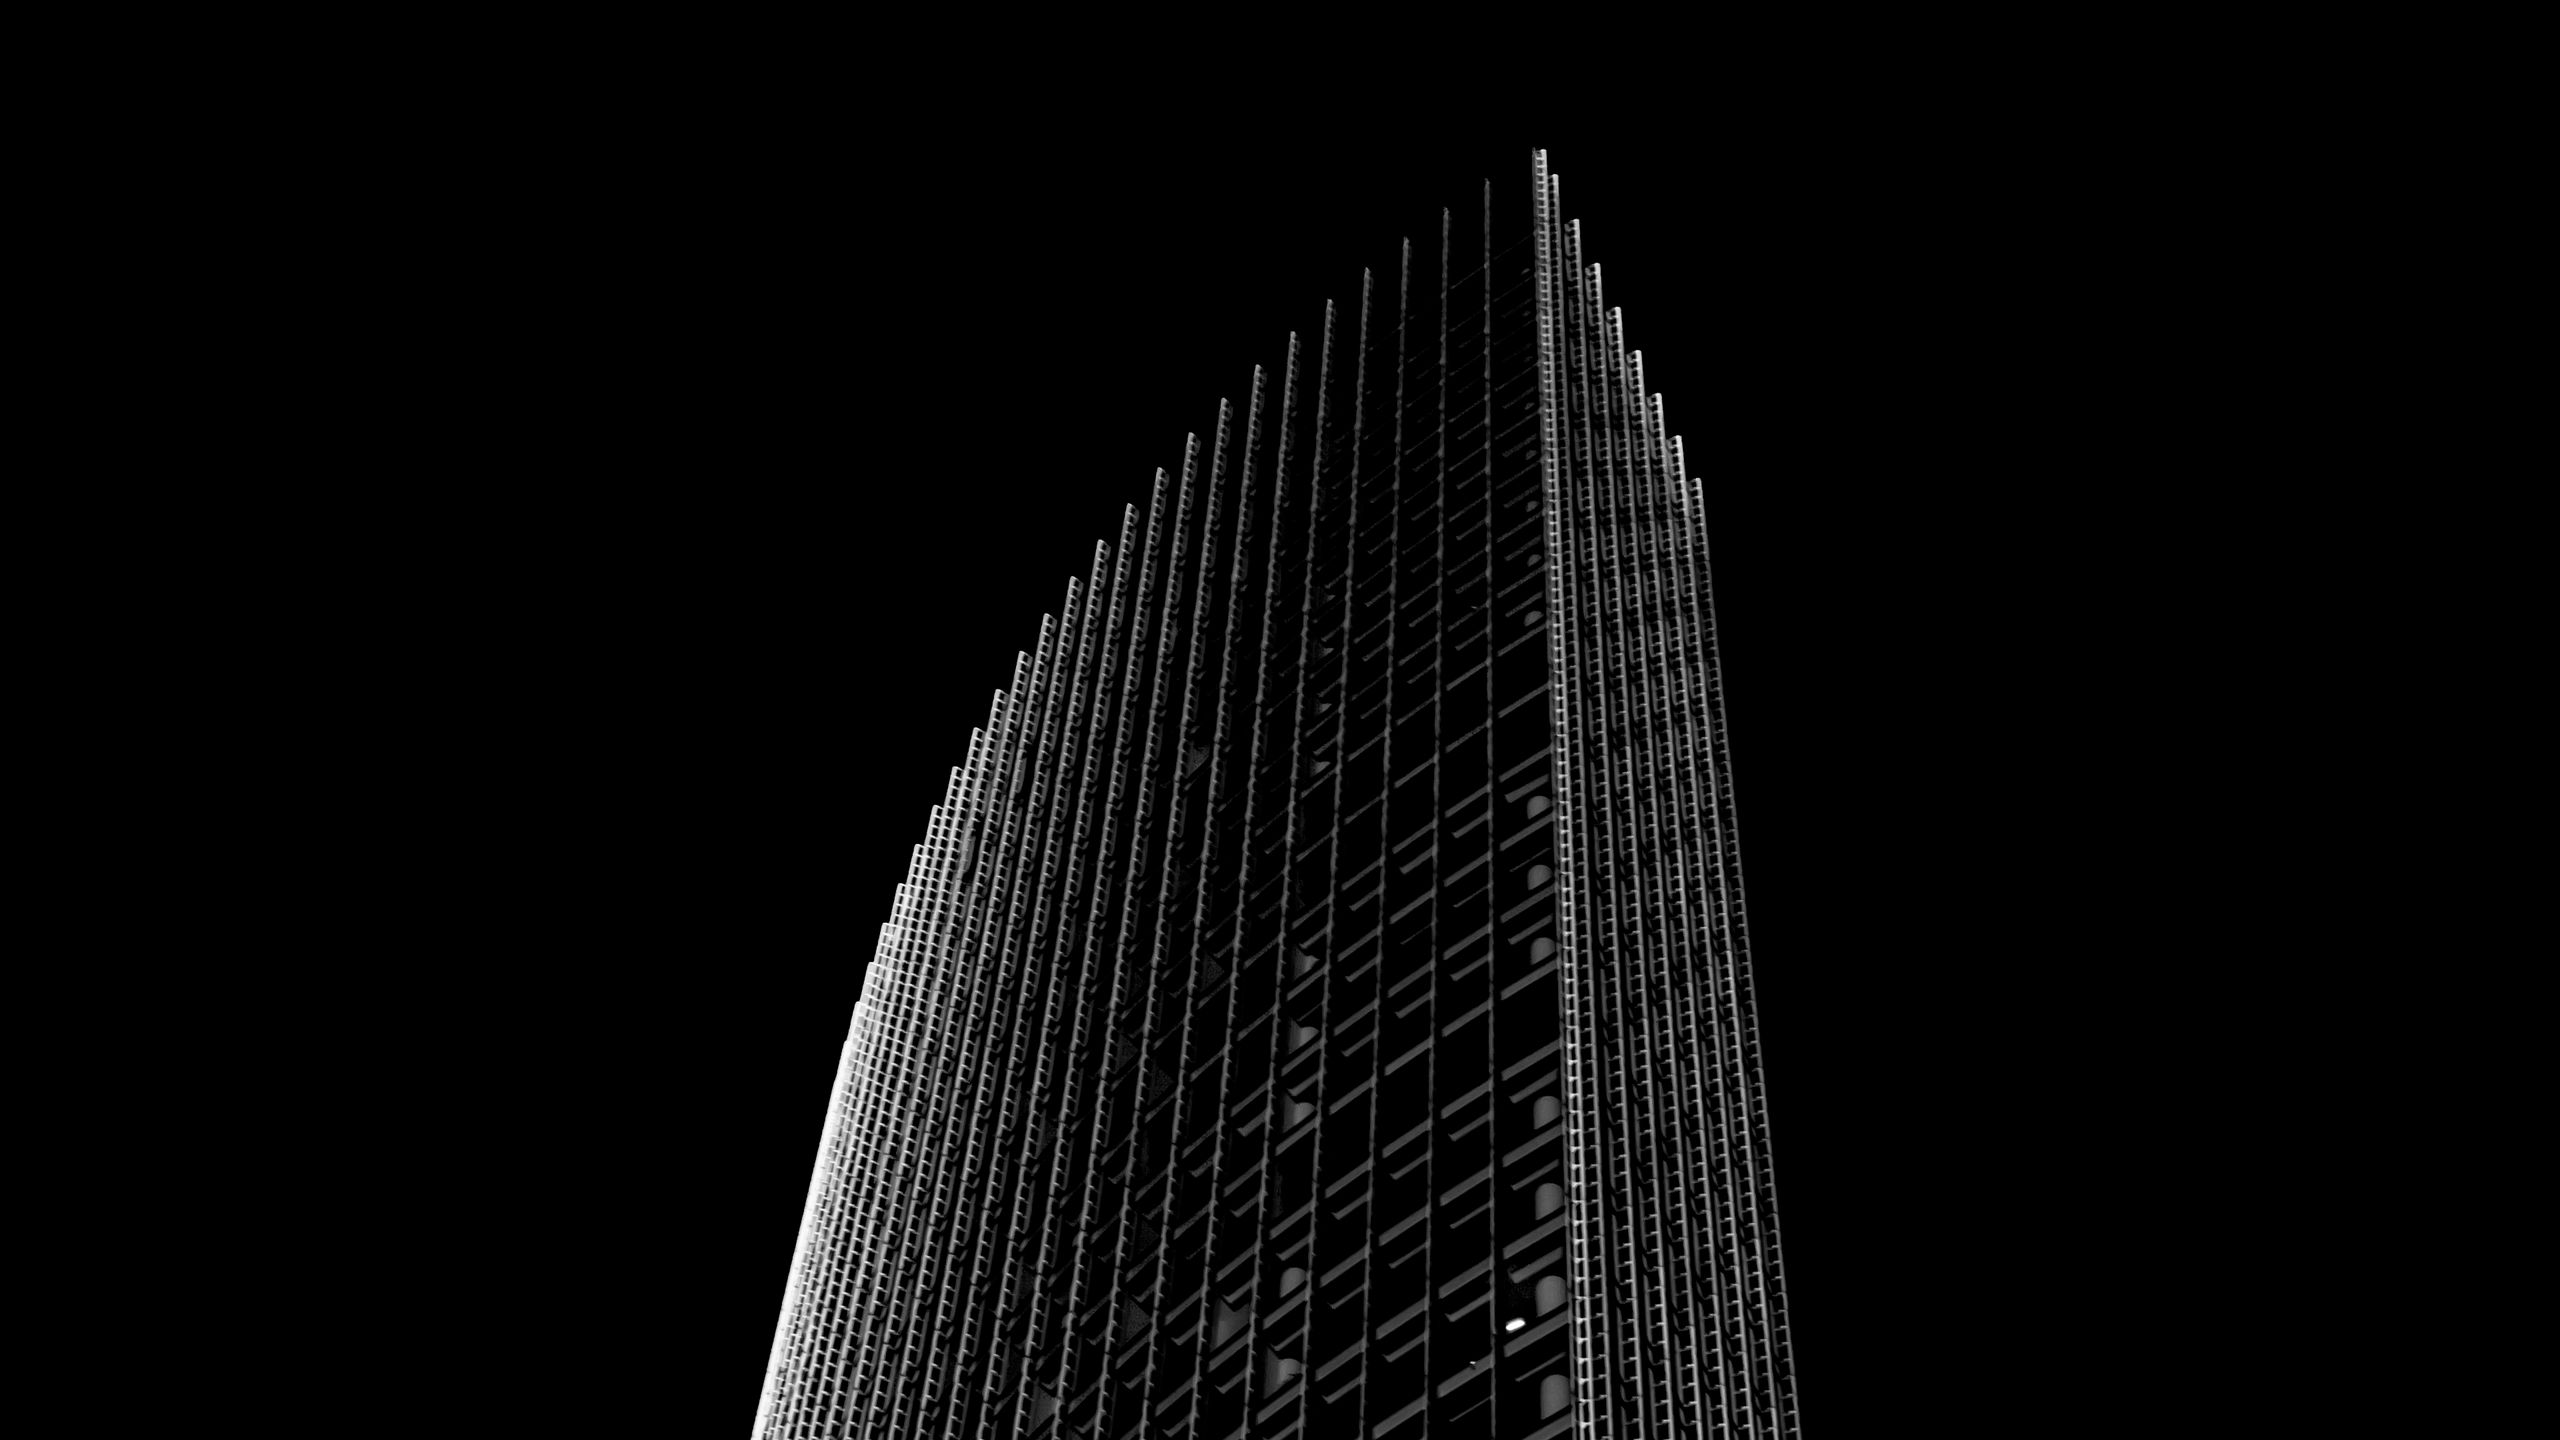 Download wallpaper 2560x1440 skyscraper, building, black and white,  minimalism, architecture, facade widescreen 16:9 hd background